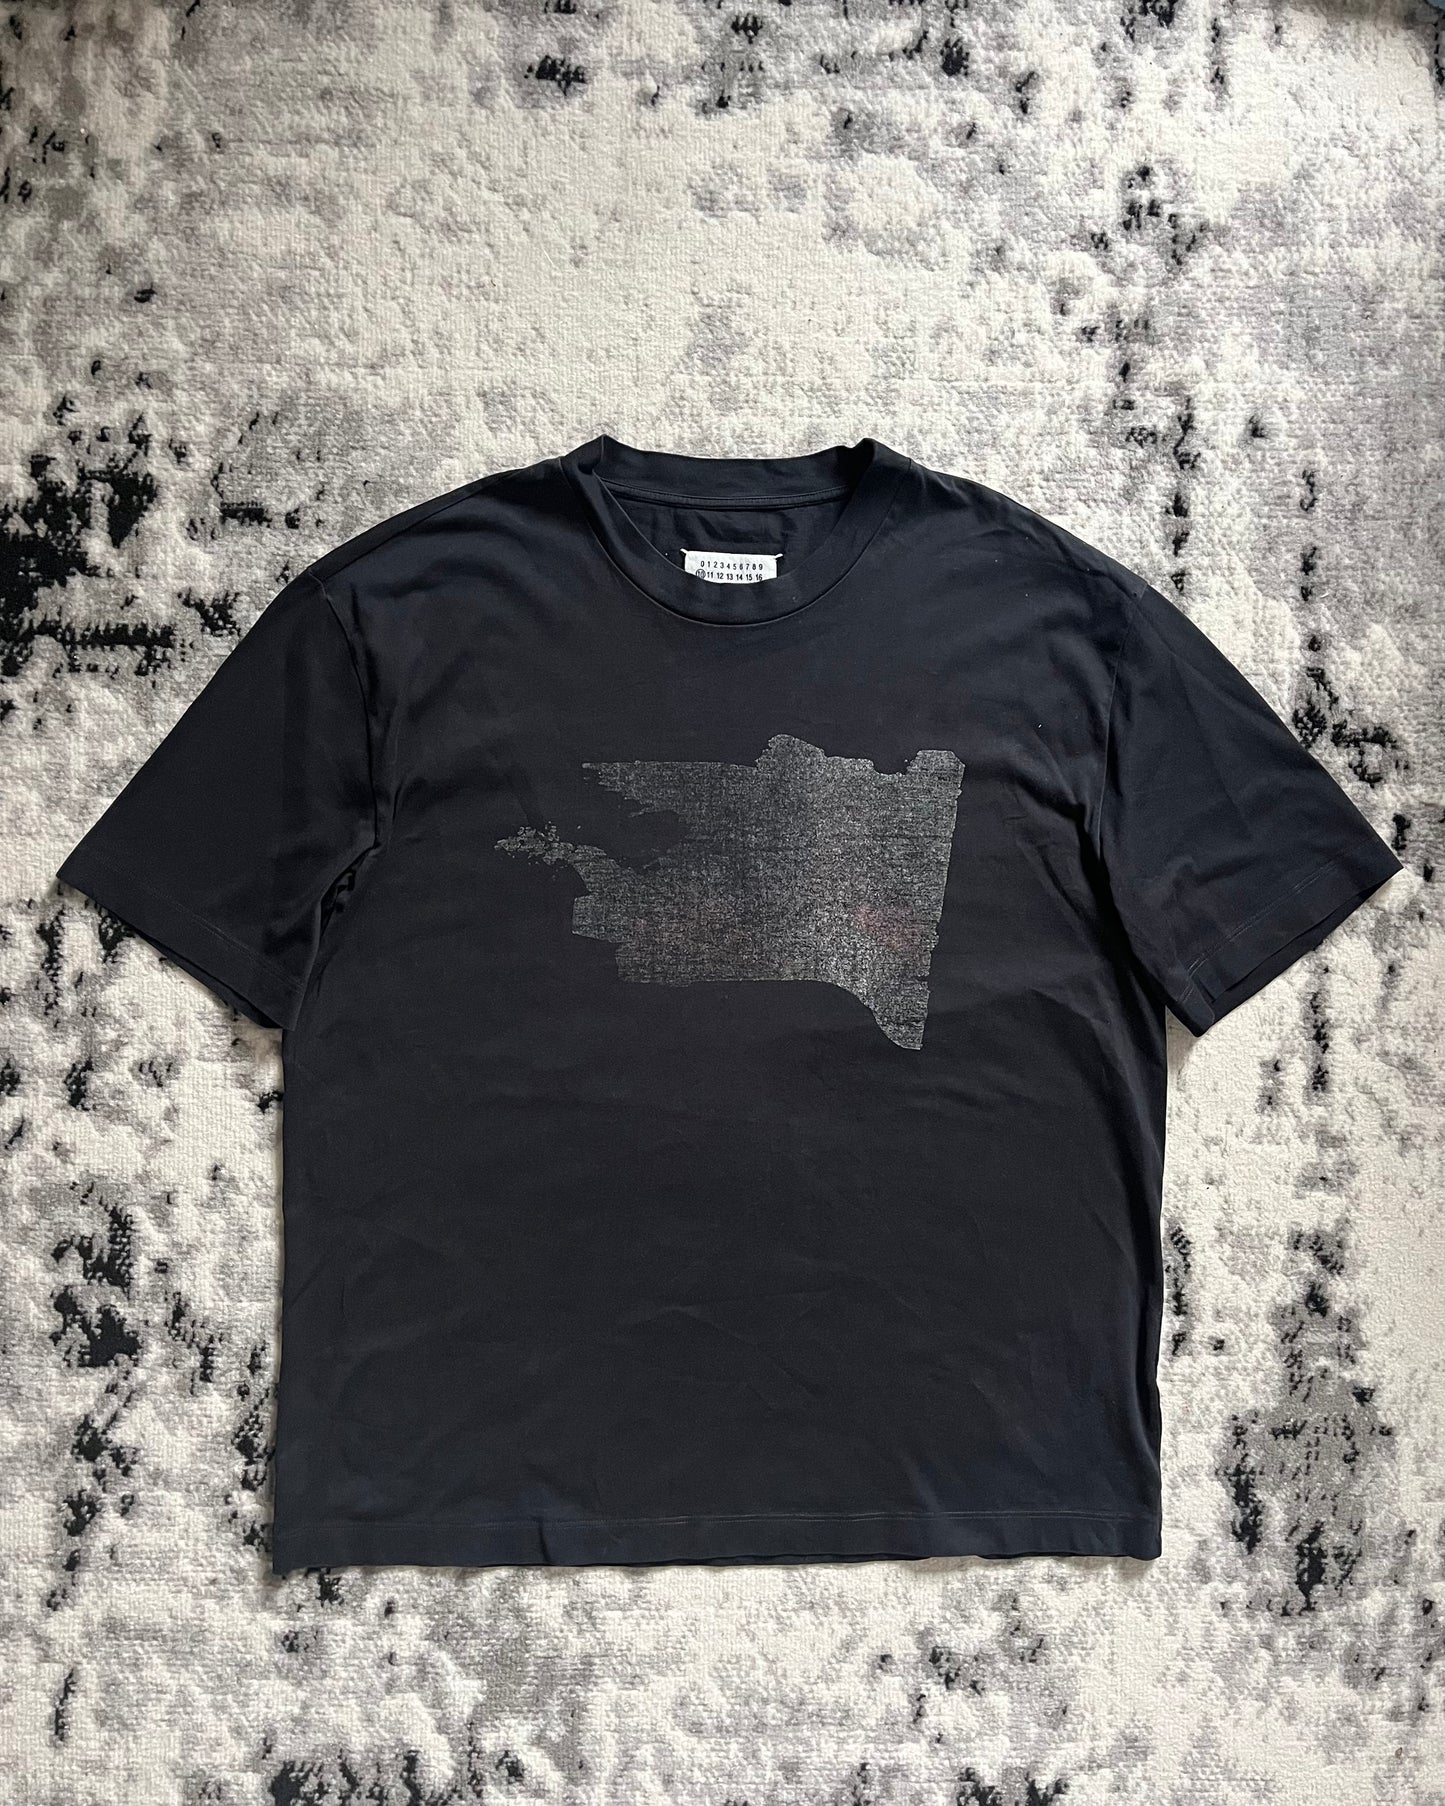 Maison Margiela Map Black Tee-shirt (L/XL)